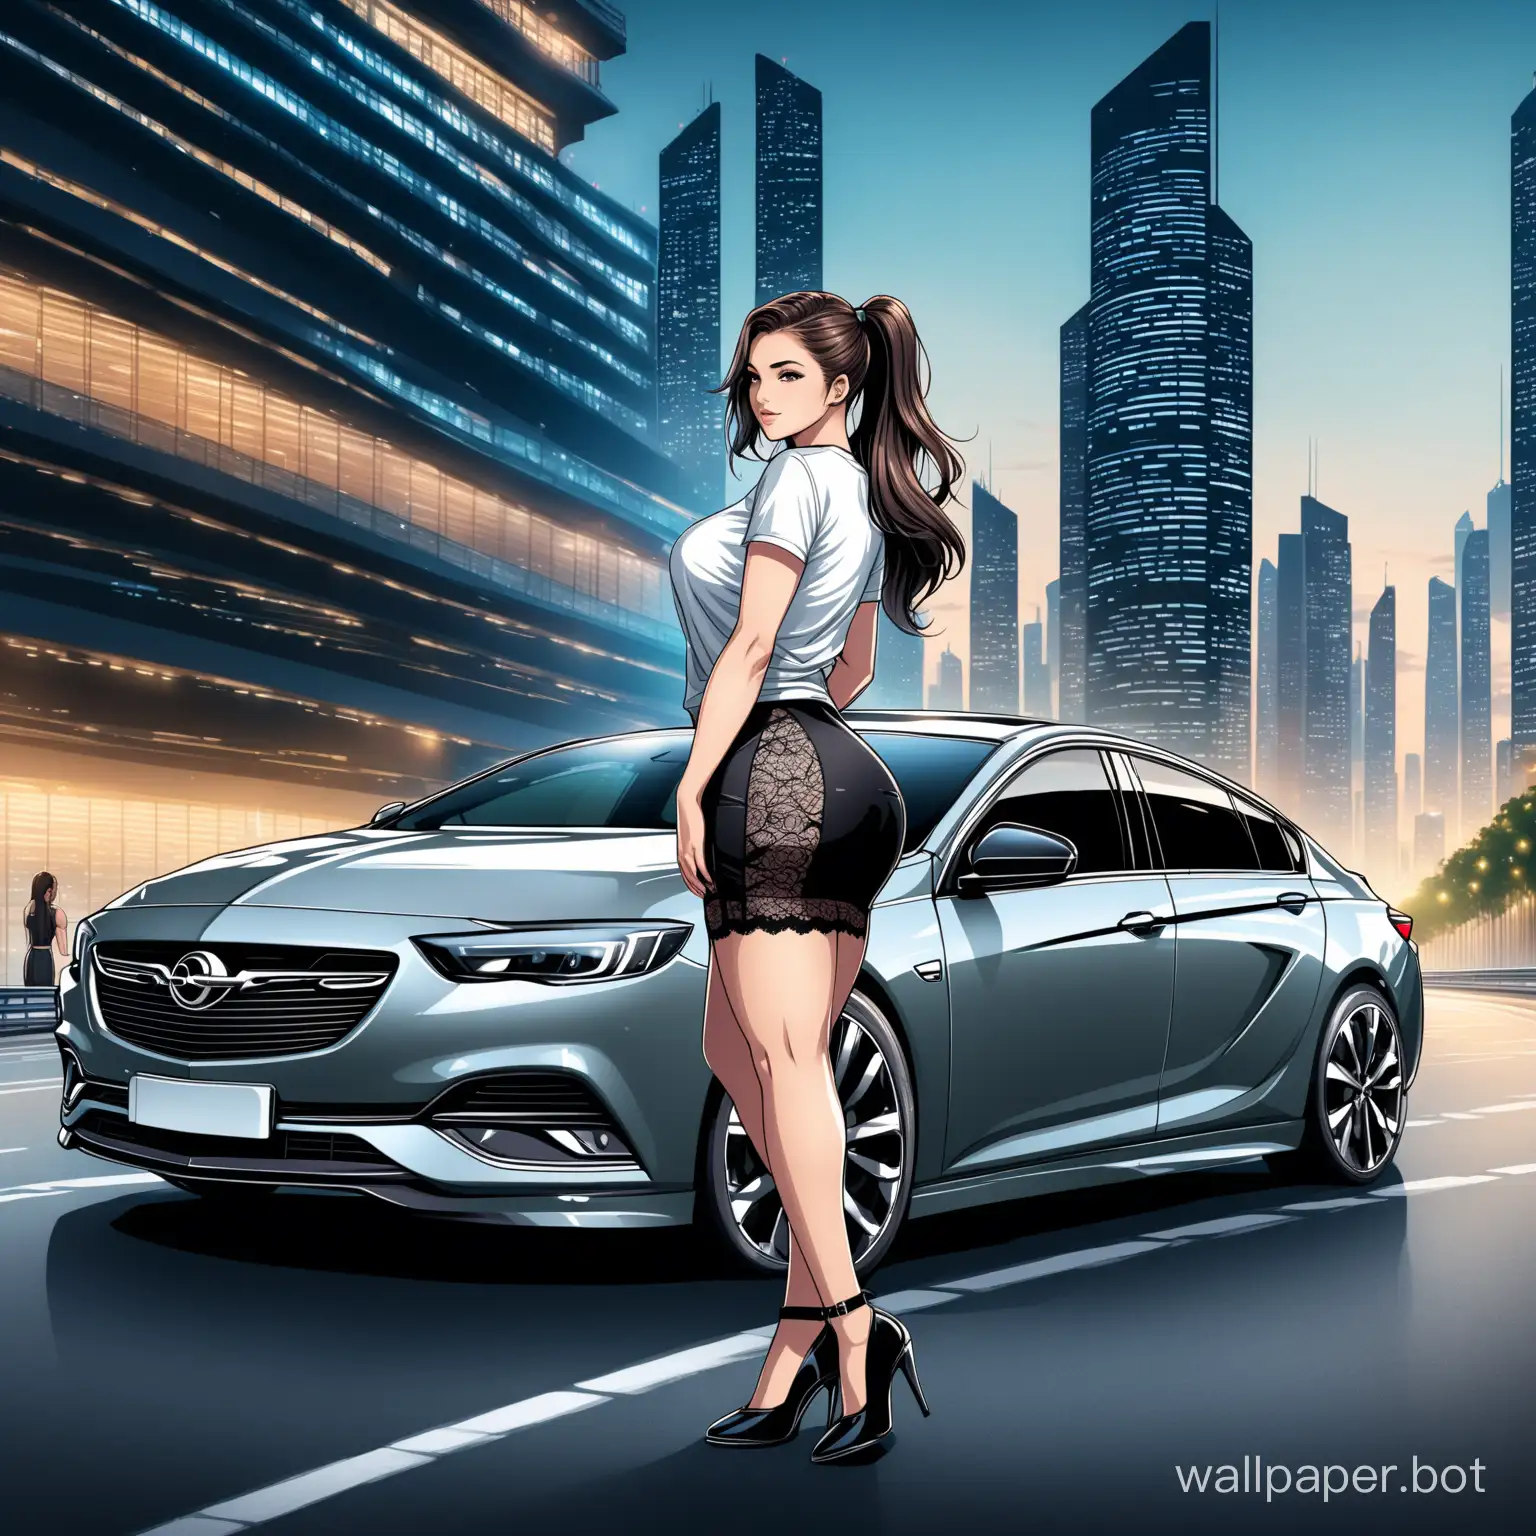 Brunette-Woman-in-Stylish-Attire-Poses-with-Dark-Grey-Opel-Insignia-Grand-Sport-in-Futuristic-City-Setting